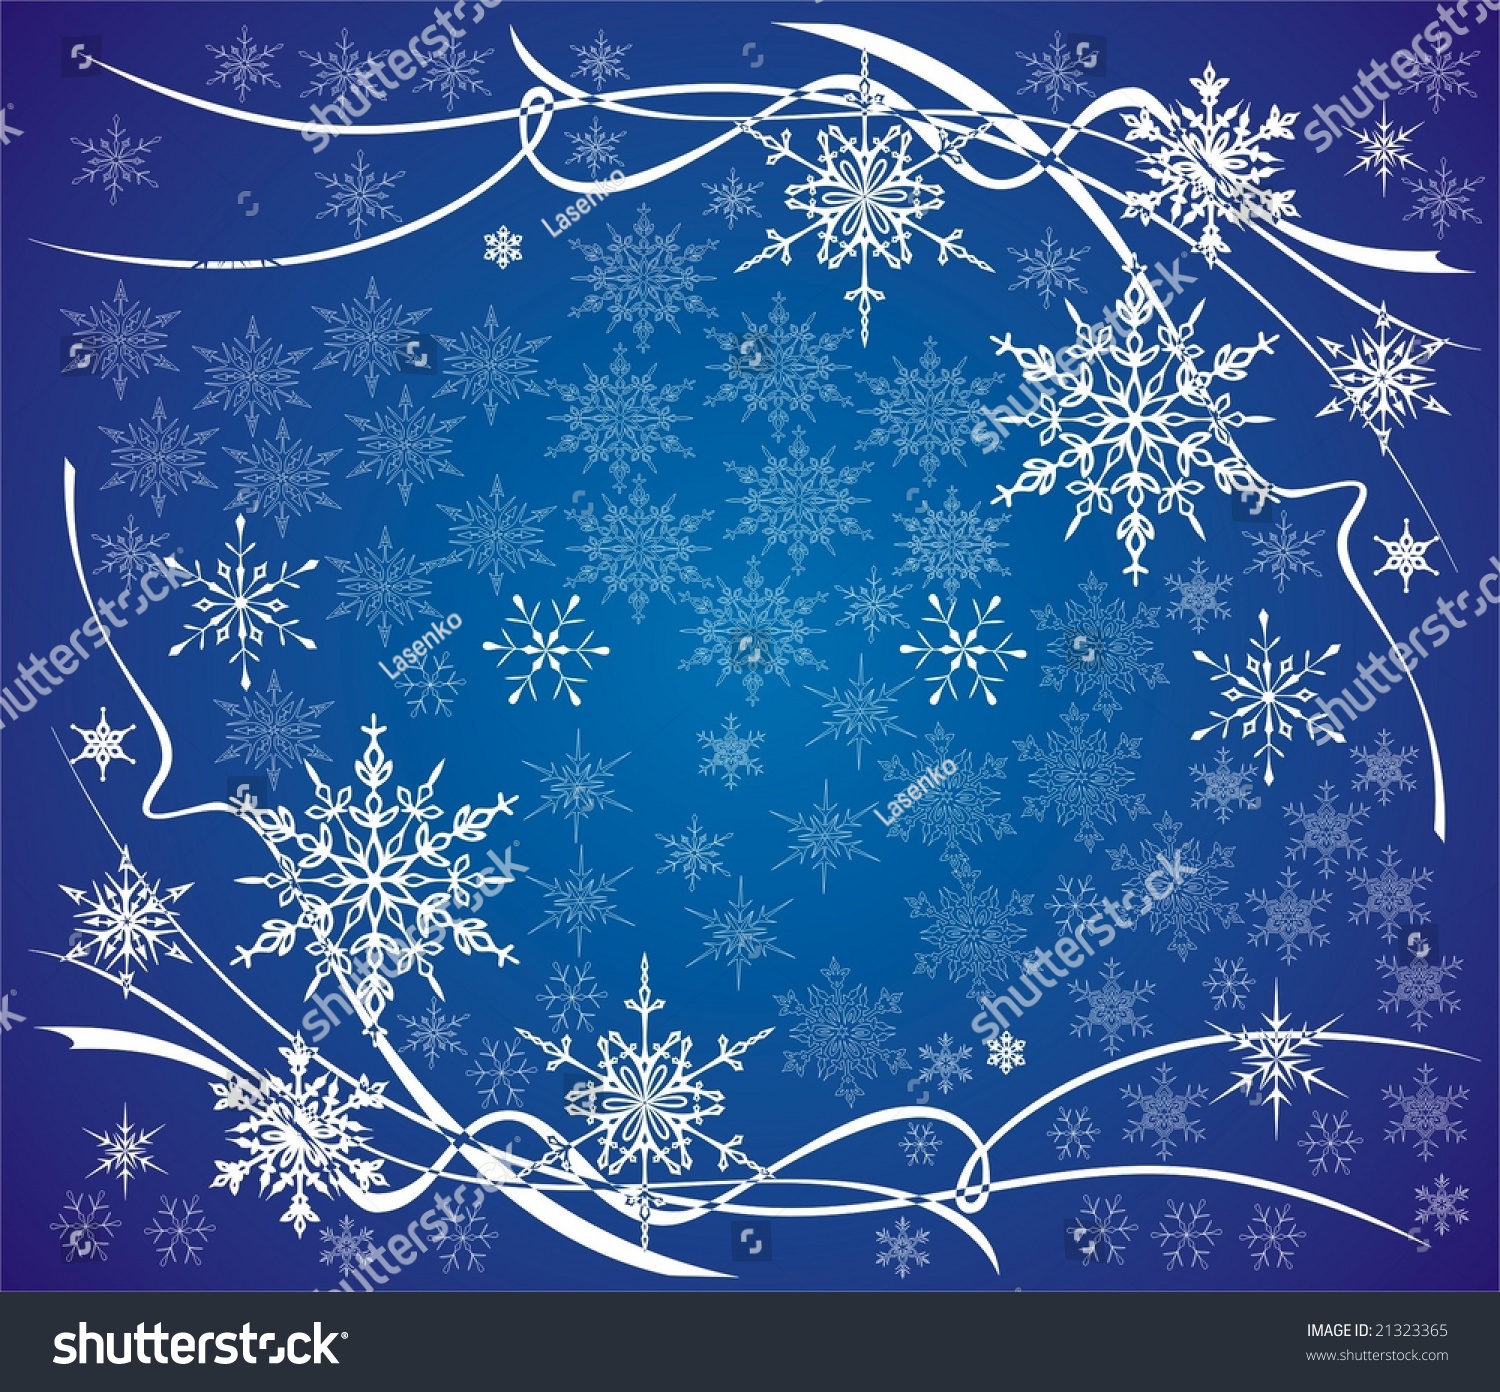 Snowflakes Stock Vector Illustration 21323365 : Shutterstock